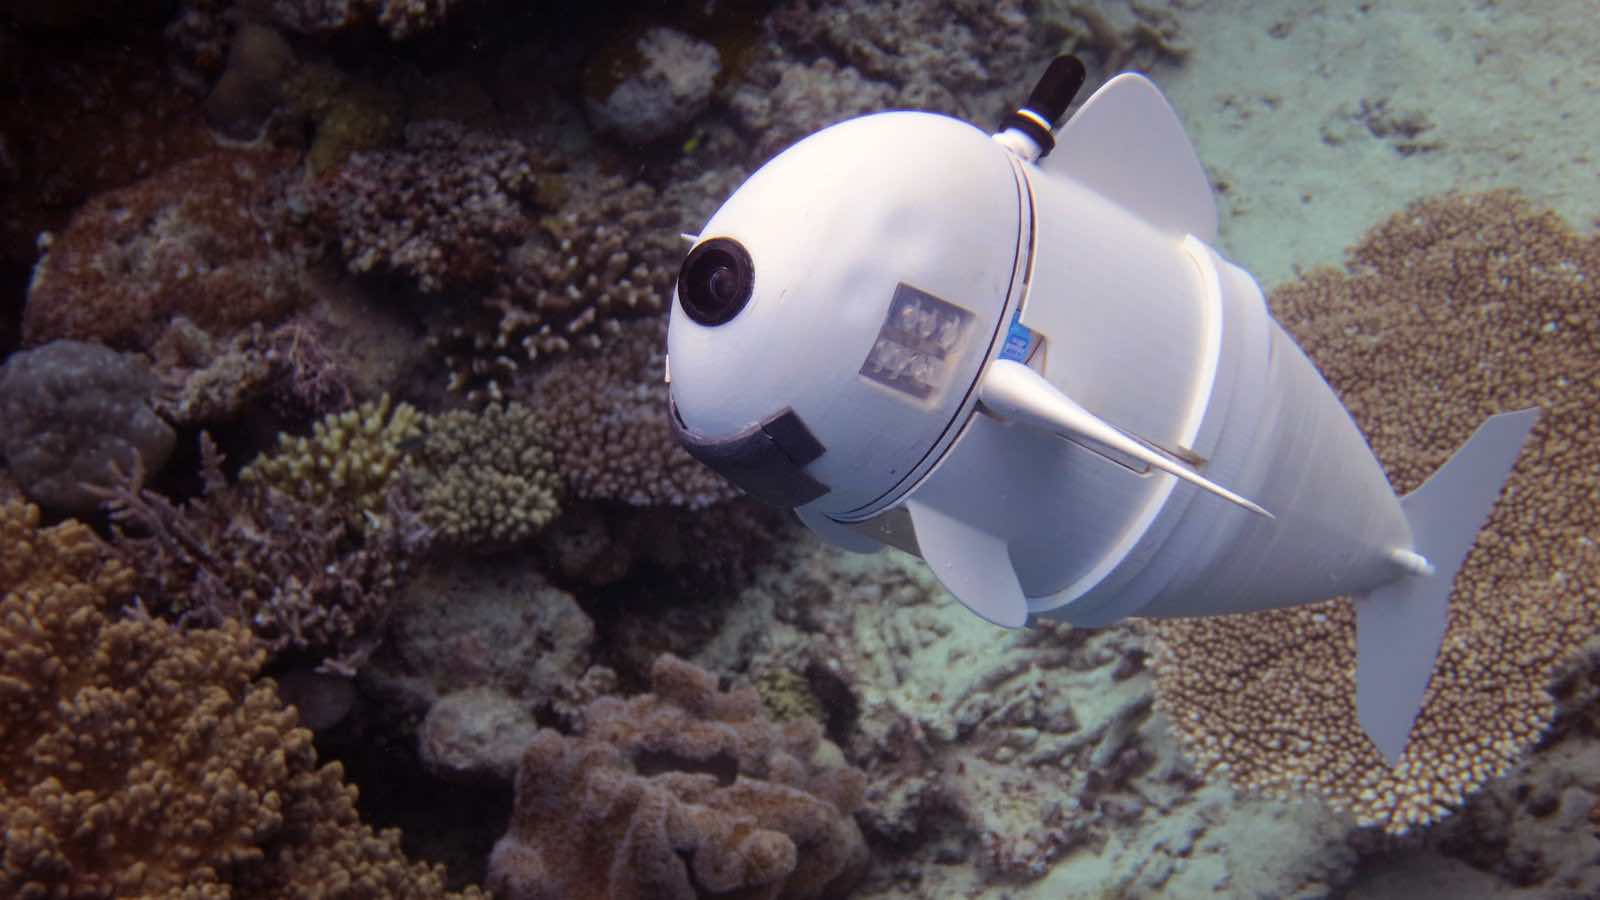 MIT's robot fish is eerily realistic (Watch)